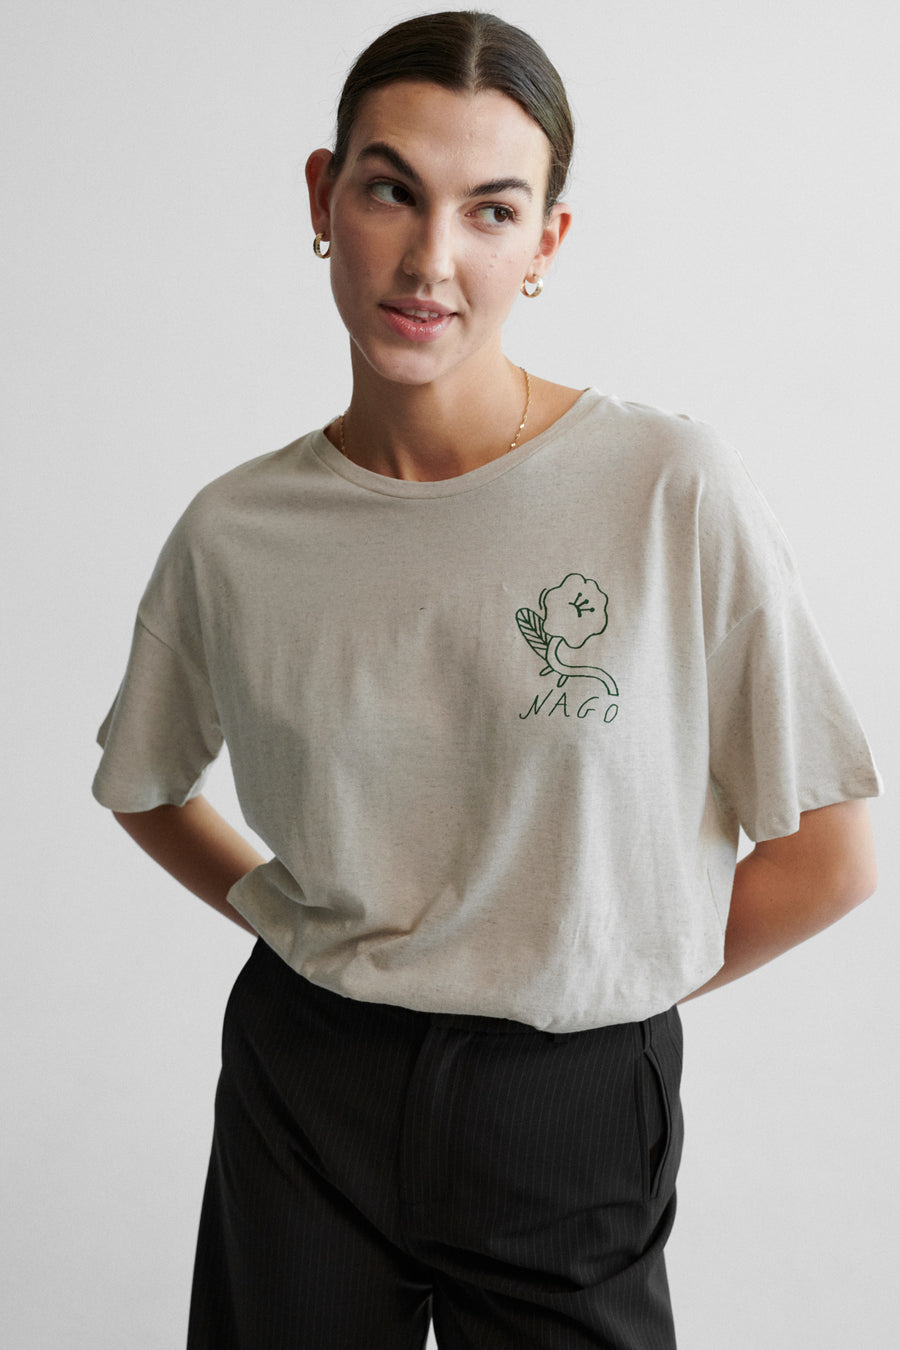 T-shirt in organic cotton & linen blend / 13 / 02 / unbleached / small print